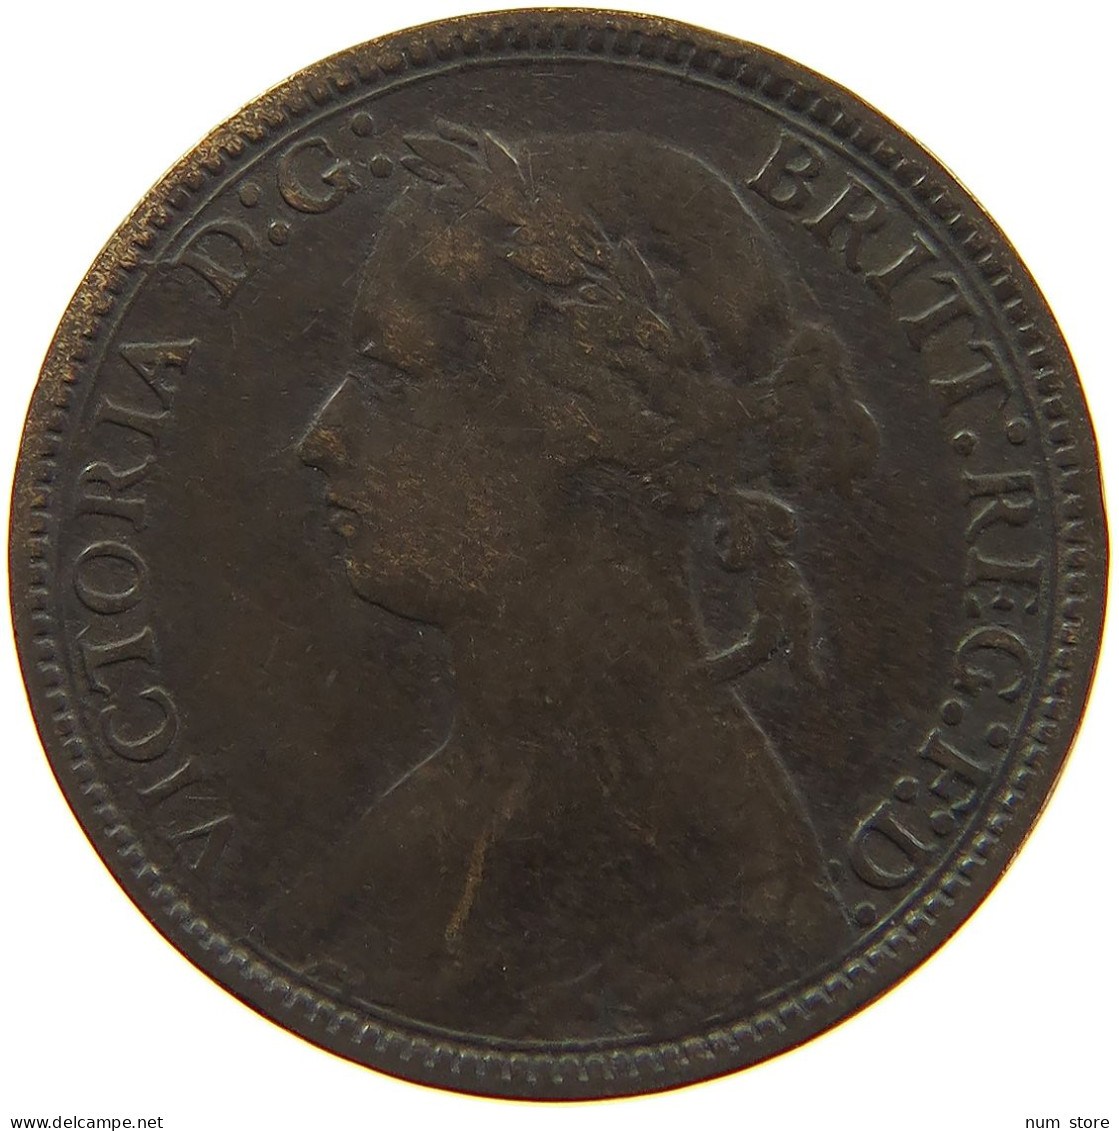 GREAT BRITAIN FARTHING 1875 H Victoria 1837-1901 #s010 0163 - B. 1 Farthing